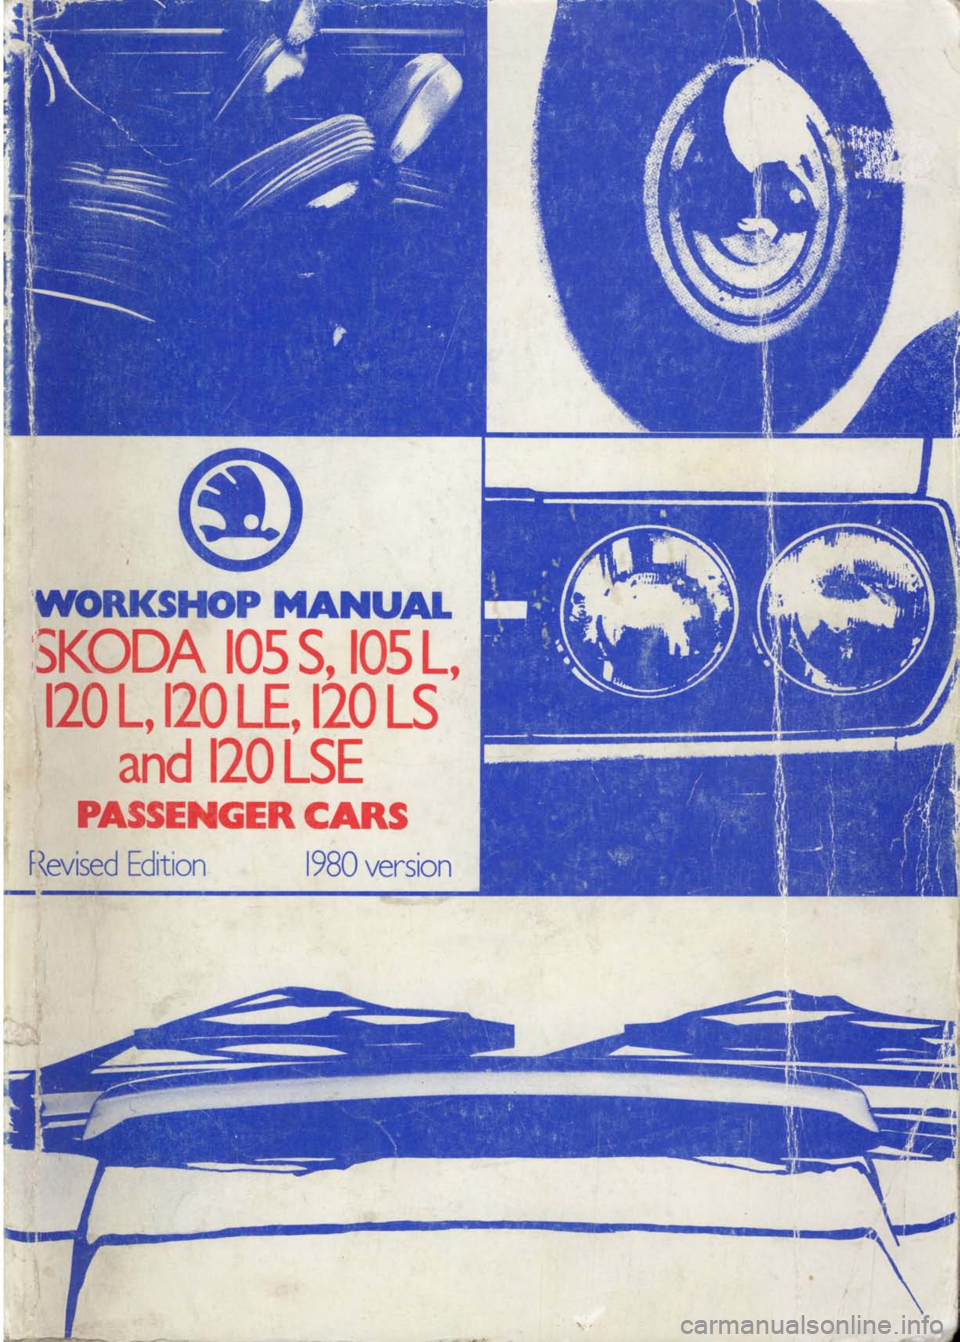 SKODA 120 LSE 1980  Workshop Manual , 
WORKSHOP 
}IANUAL
;sl(oDA  t05s, t05  1,
120 L,  120 
LE, 120  LS
and  120 
LsE
PASSENGERCARS
F{evised  Edition  l9B0  version
- 